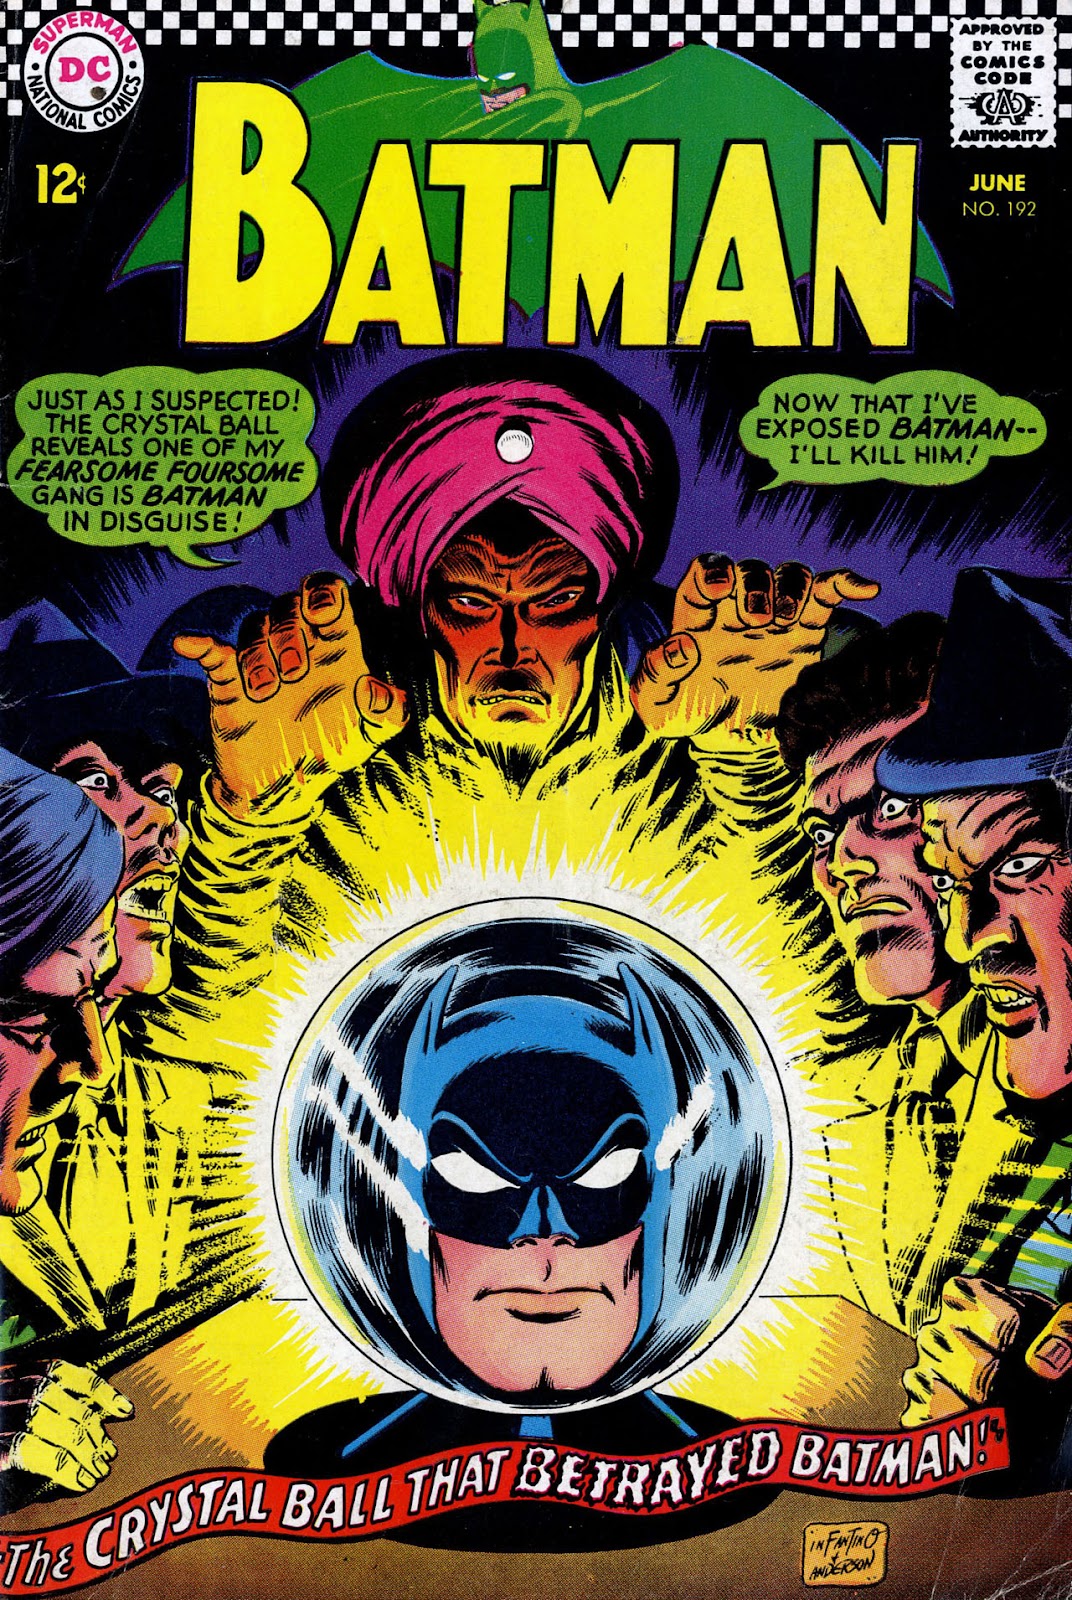 Batman V1 192 | Read Batman V1 192 comic online in high quality. Read Full  Comic online for free - Read comics online in high quality .| READ COMIC  ONLINE